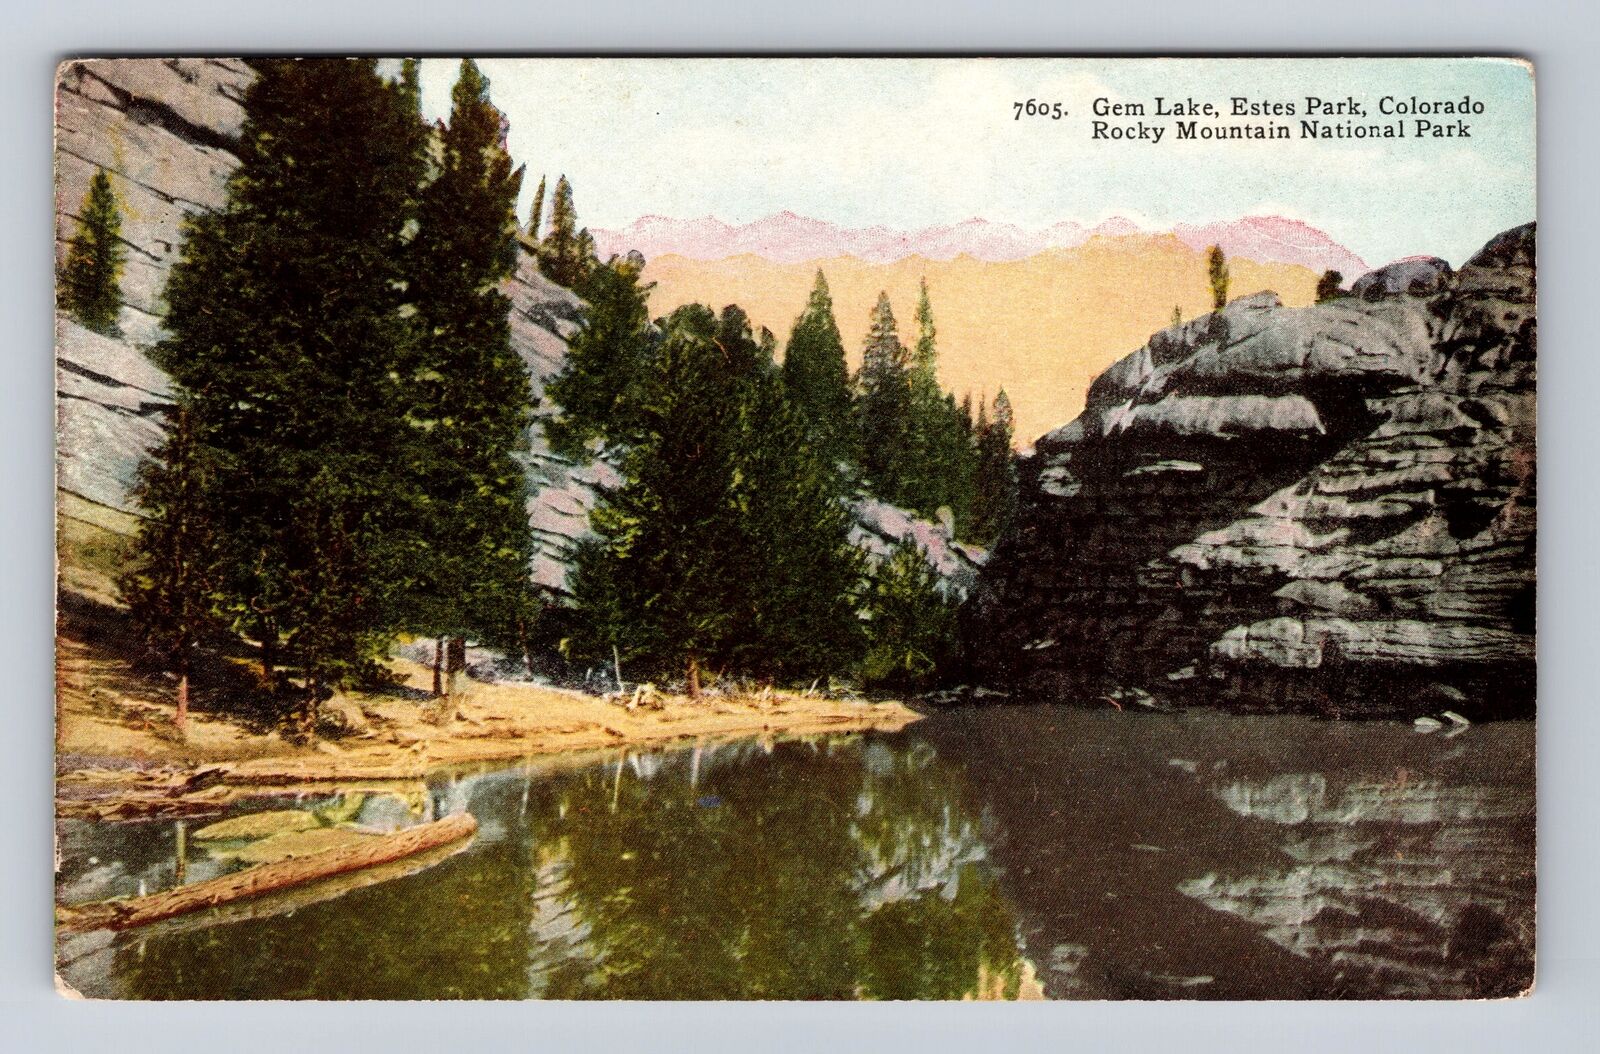 Rocky Mountain National Park, Gem Lake, Series #7605, Vintage Souvenir Postcard